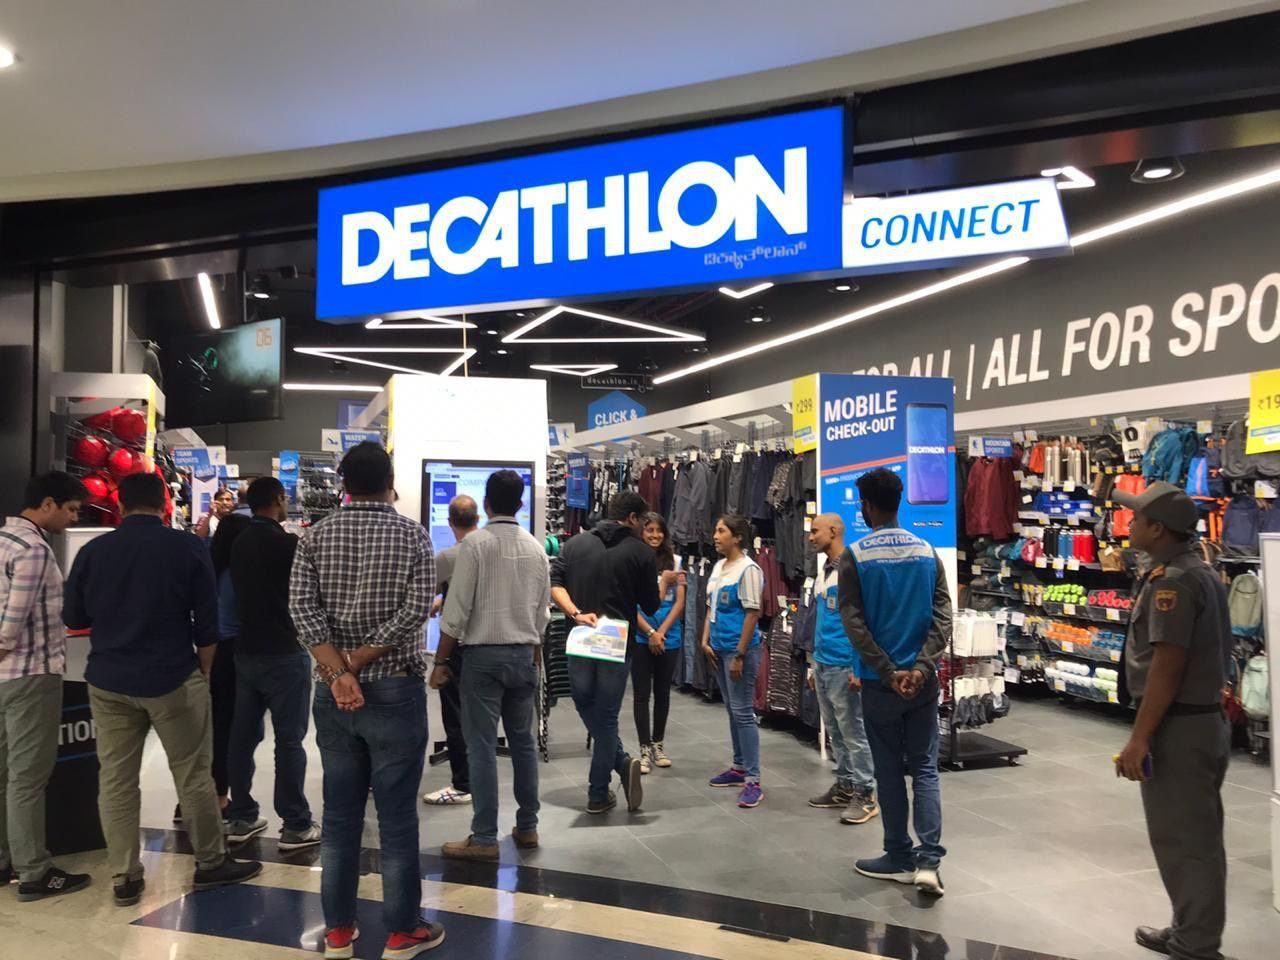 Hn - Connect Store - Sports Advisor - Decathlon